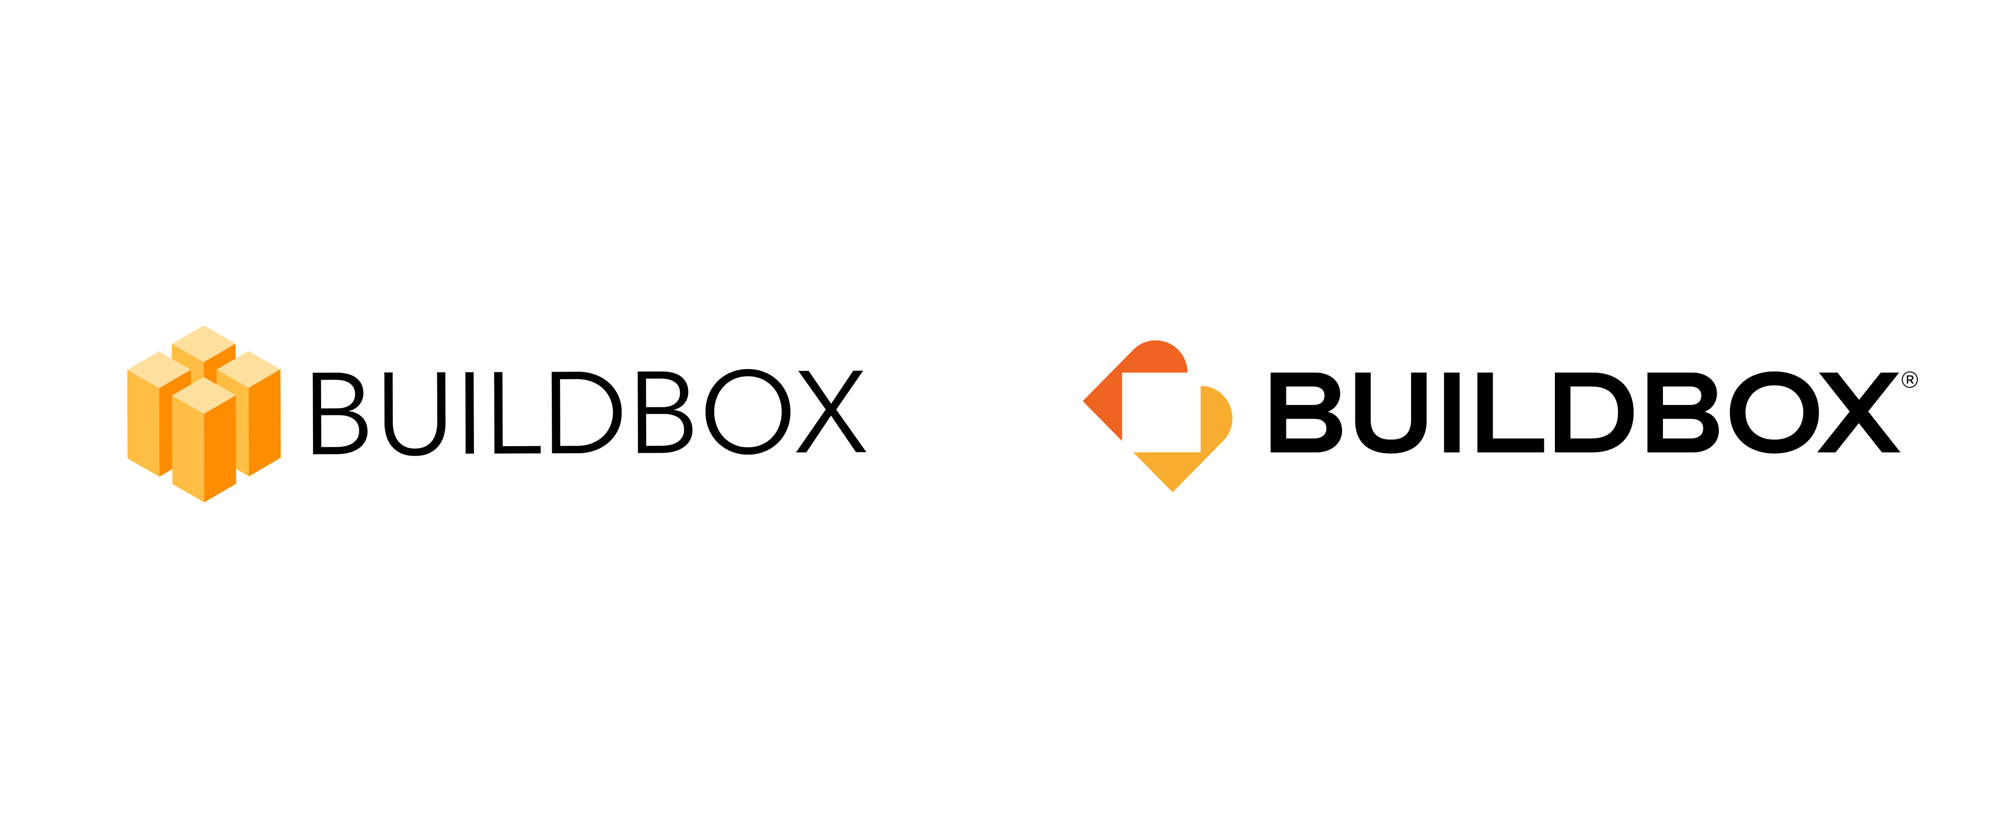 buildbox art pack download